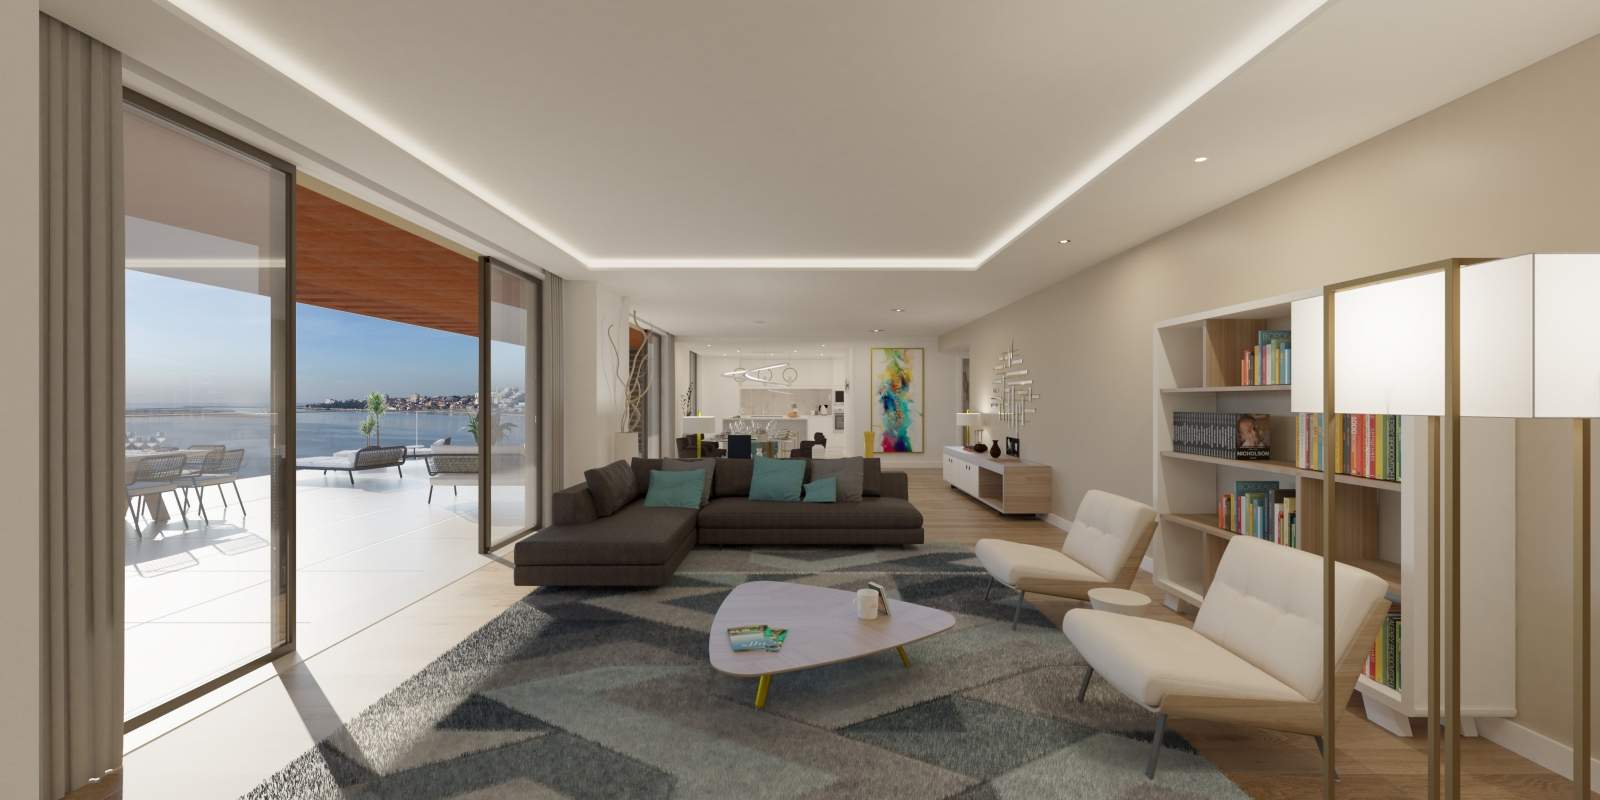 Apartment for sale with terrace, in exclusive condominium, V. N. Gaia, Porto, Portugal_176116